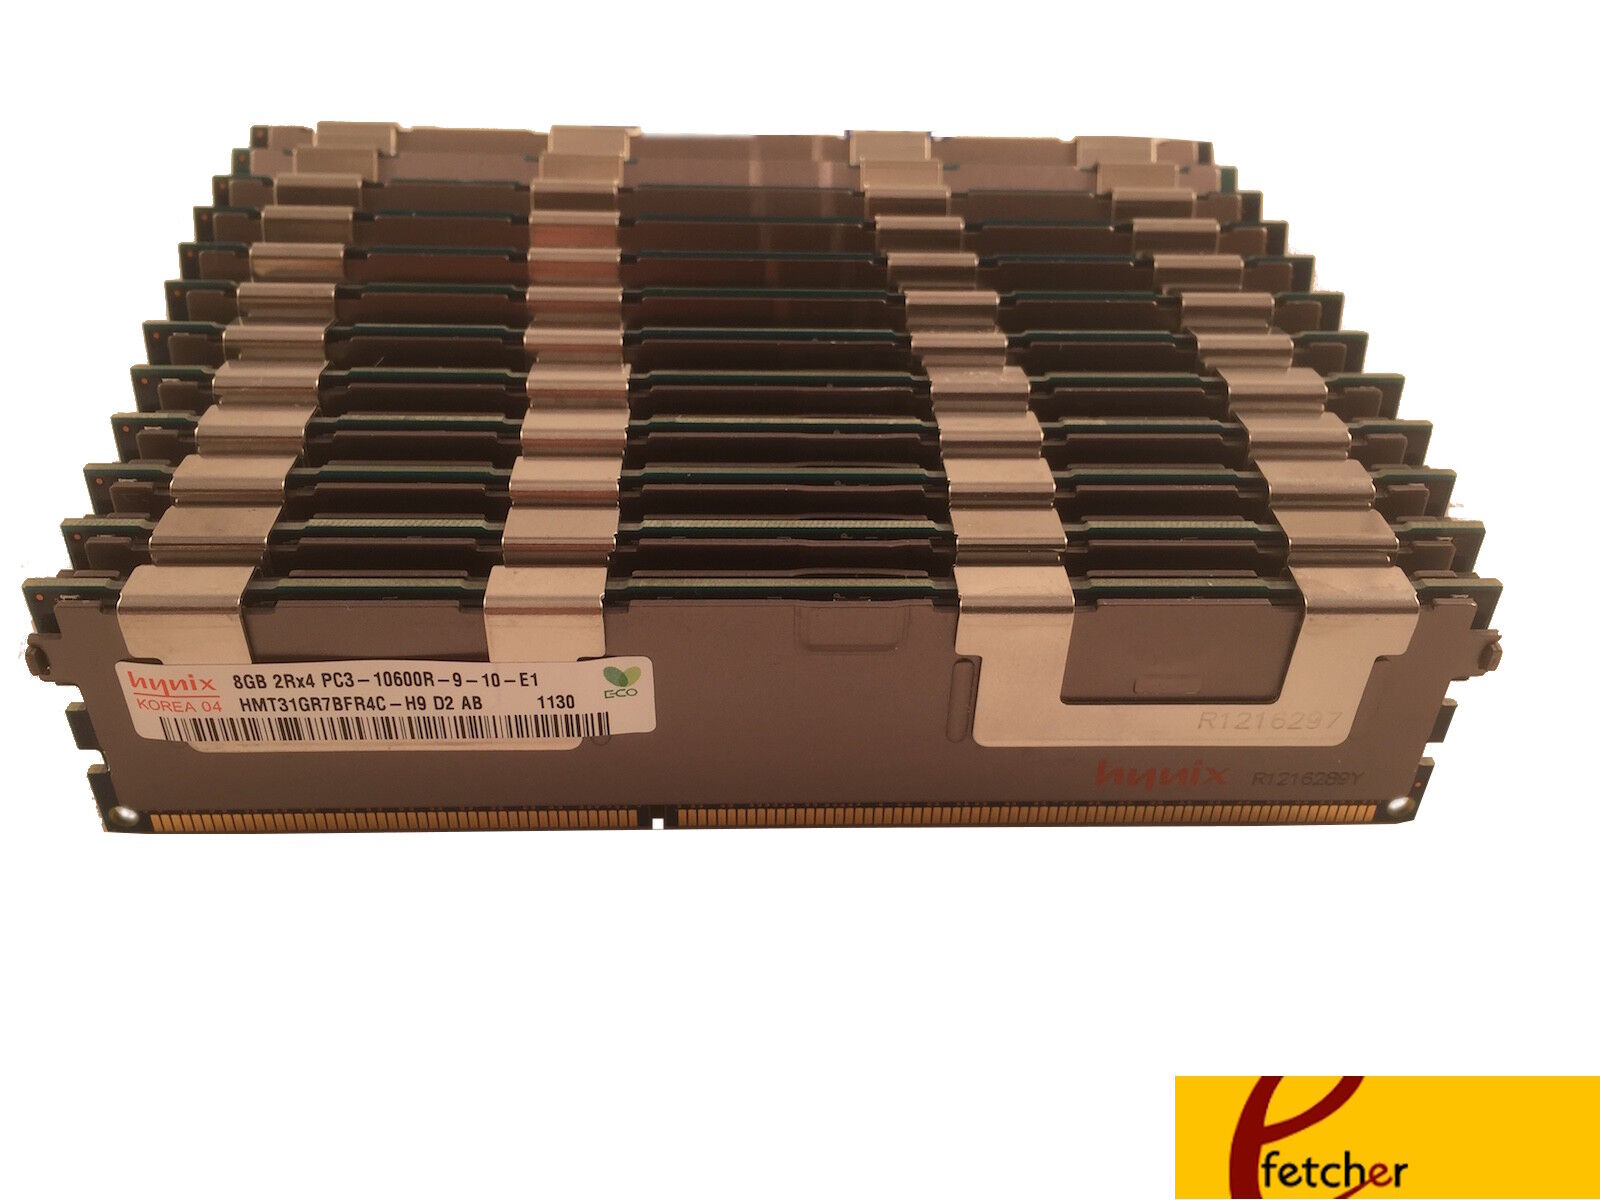 256GB (32 x 8GB) PC3-10600R DDR3 1333 Server Memory Upgrade Dell PowerEdge R910 